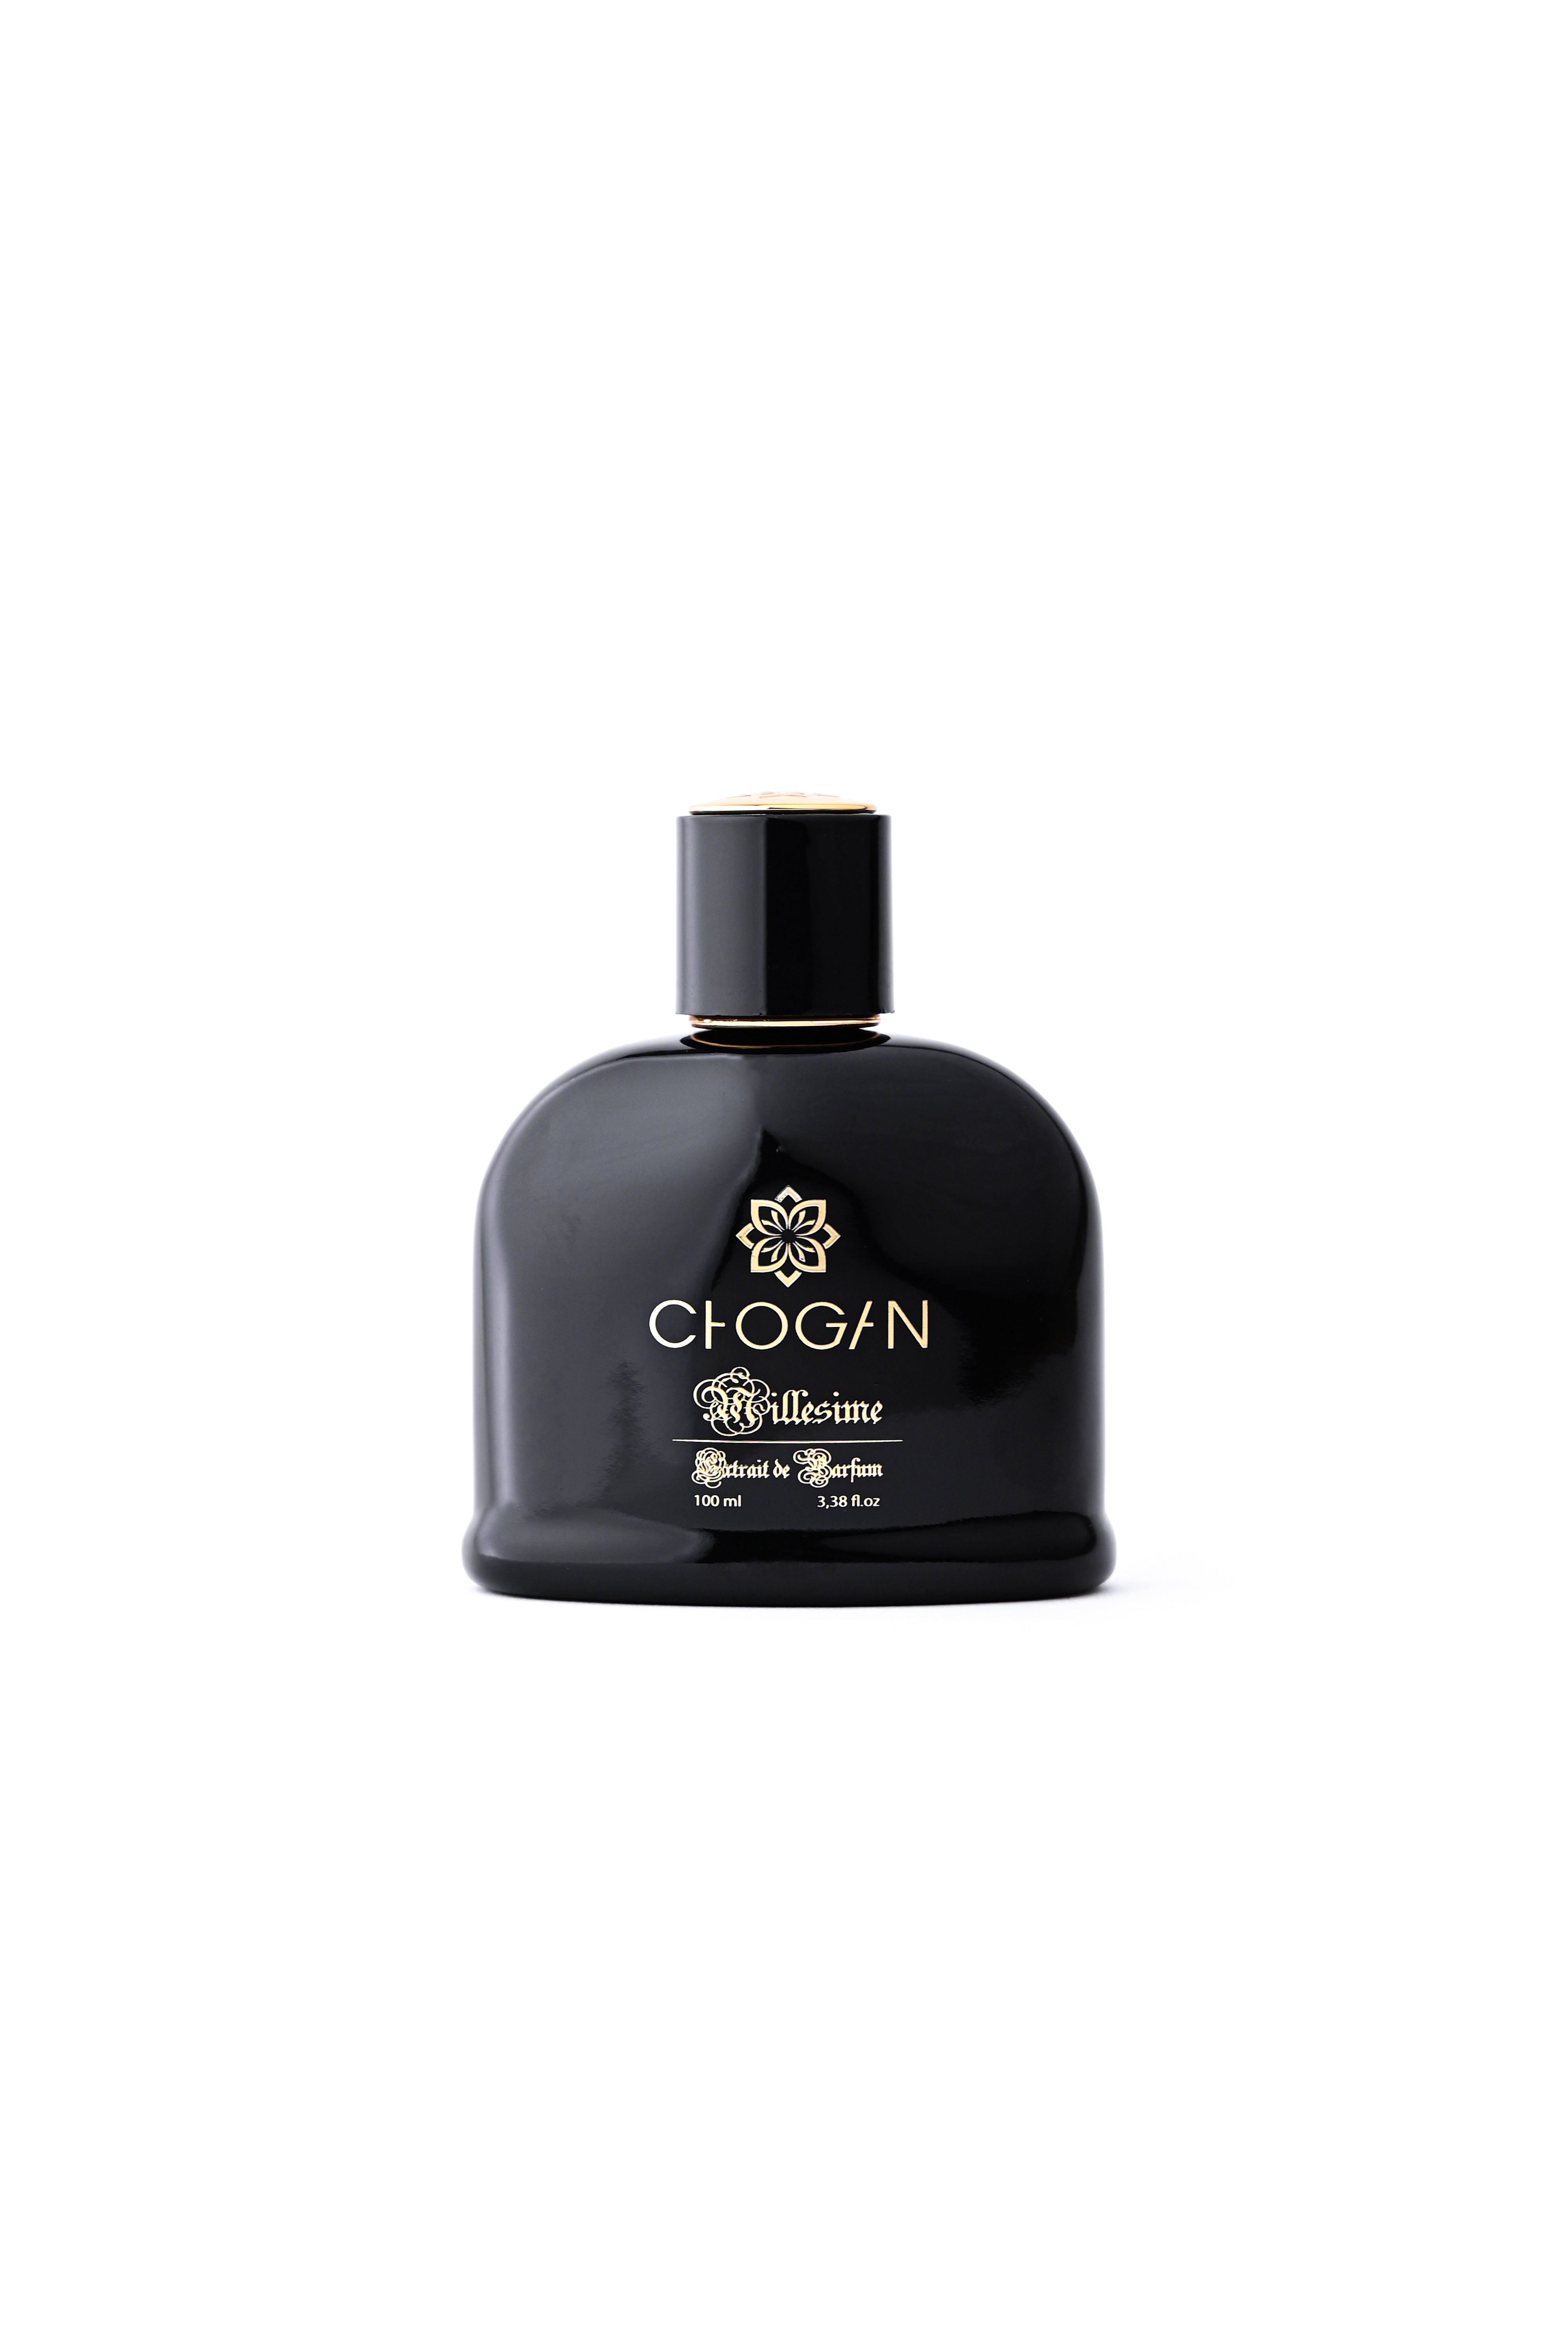 Chogan Luxury Unisex Fragrance - 105 Coffee-Oriental-Sweet 